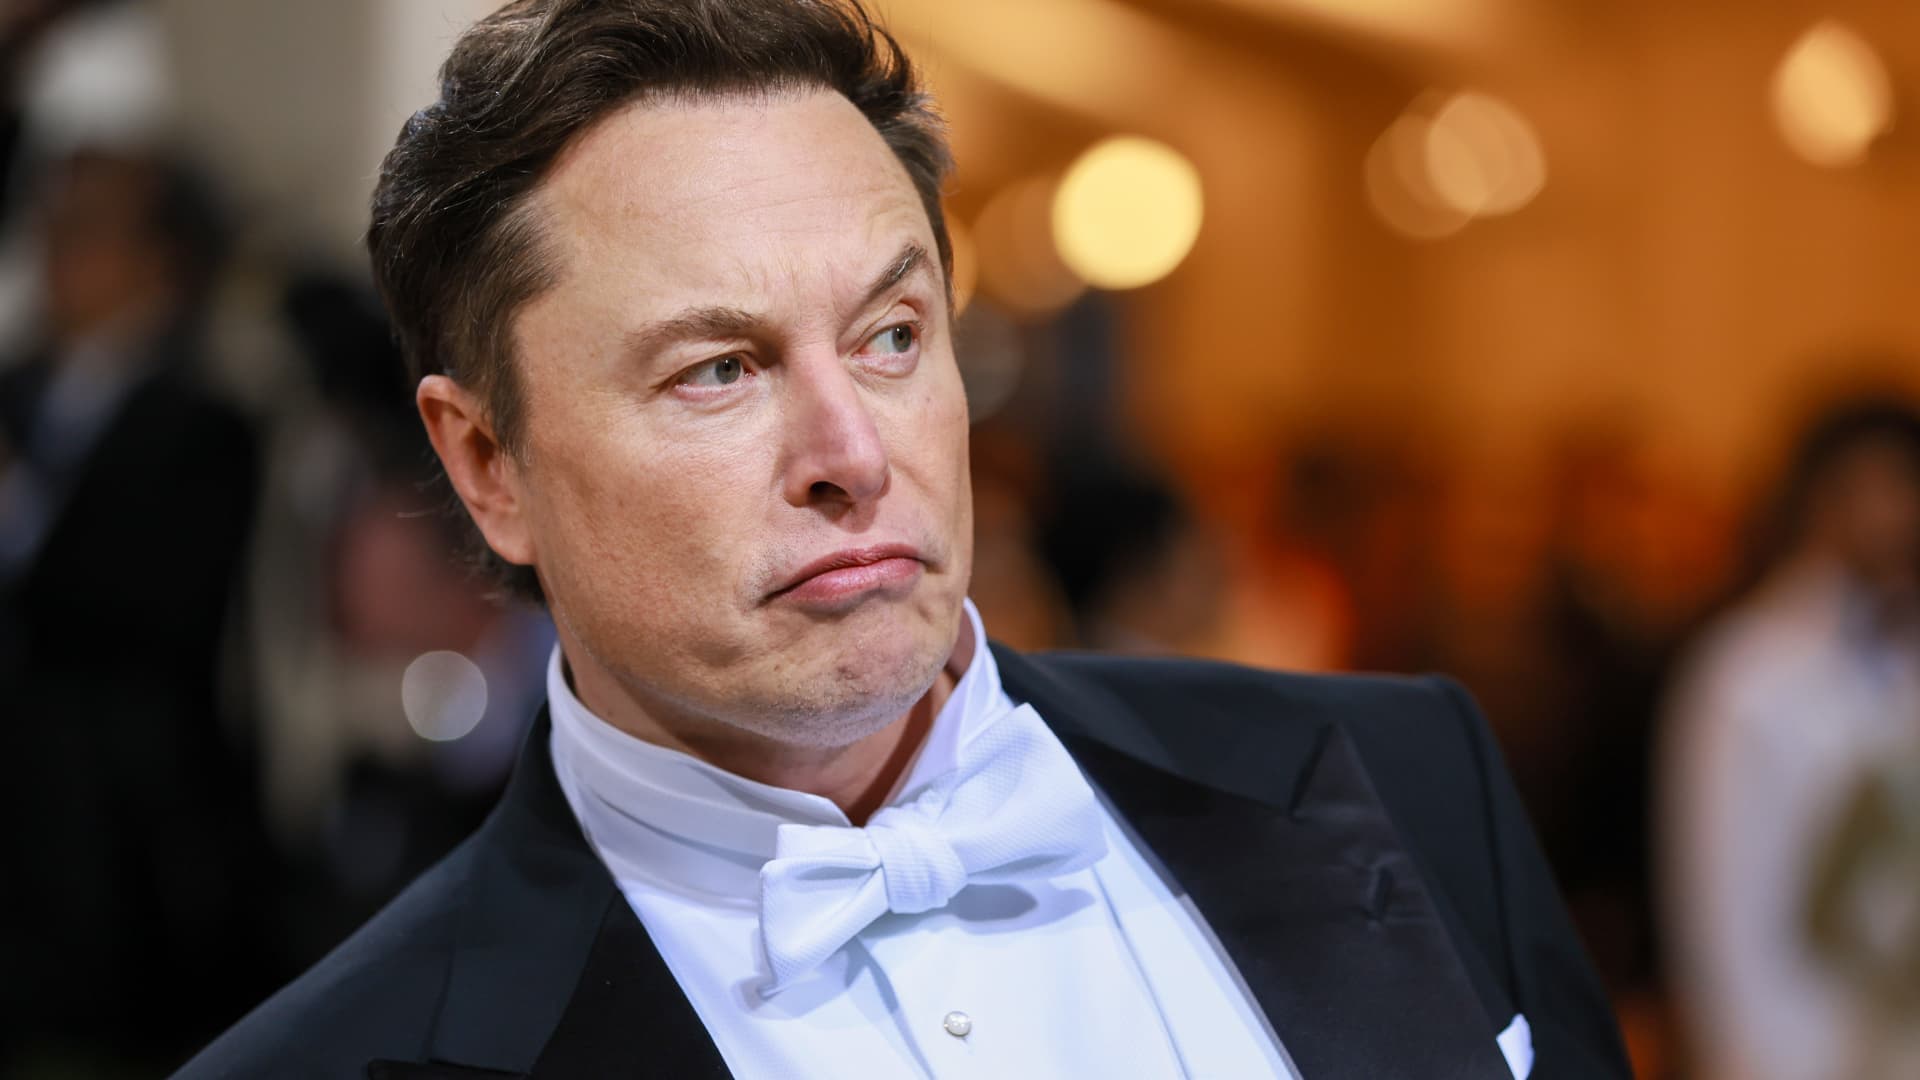 Elon Musk faces long legal war with Twitter as he abandons deal